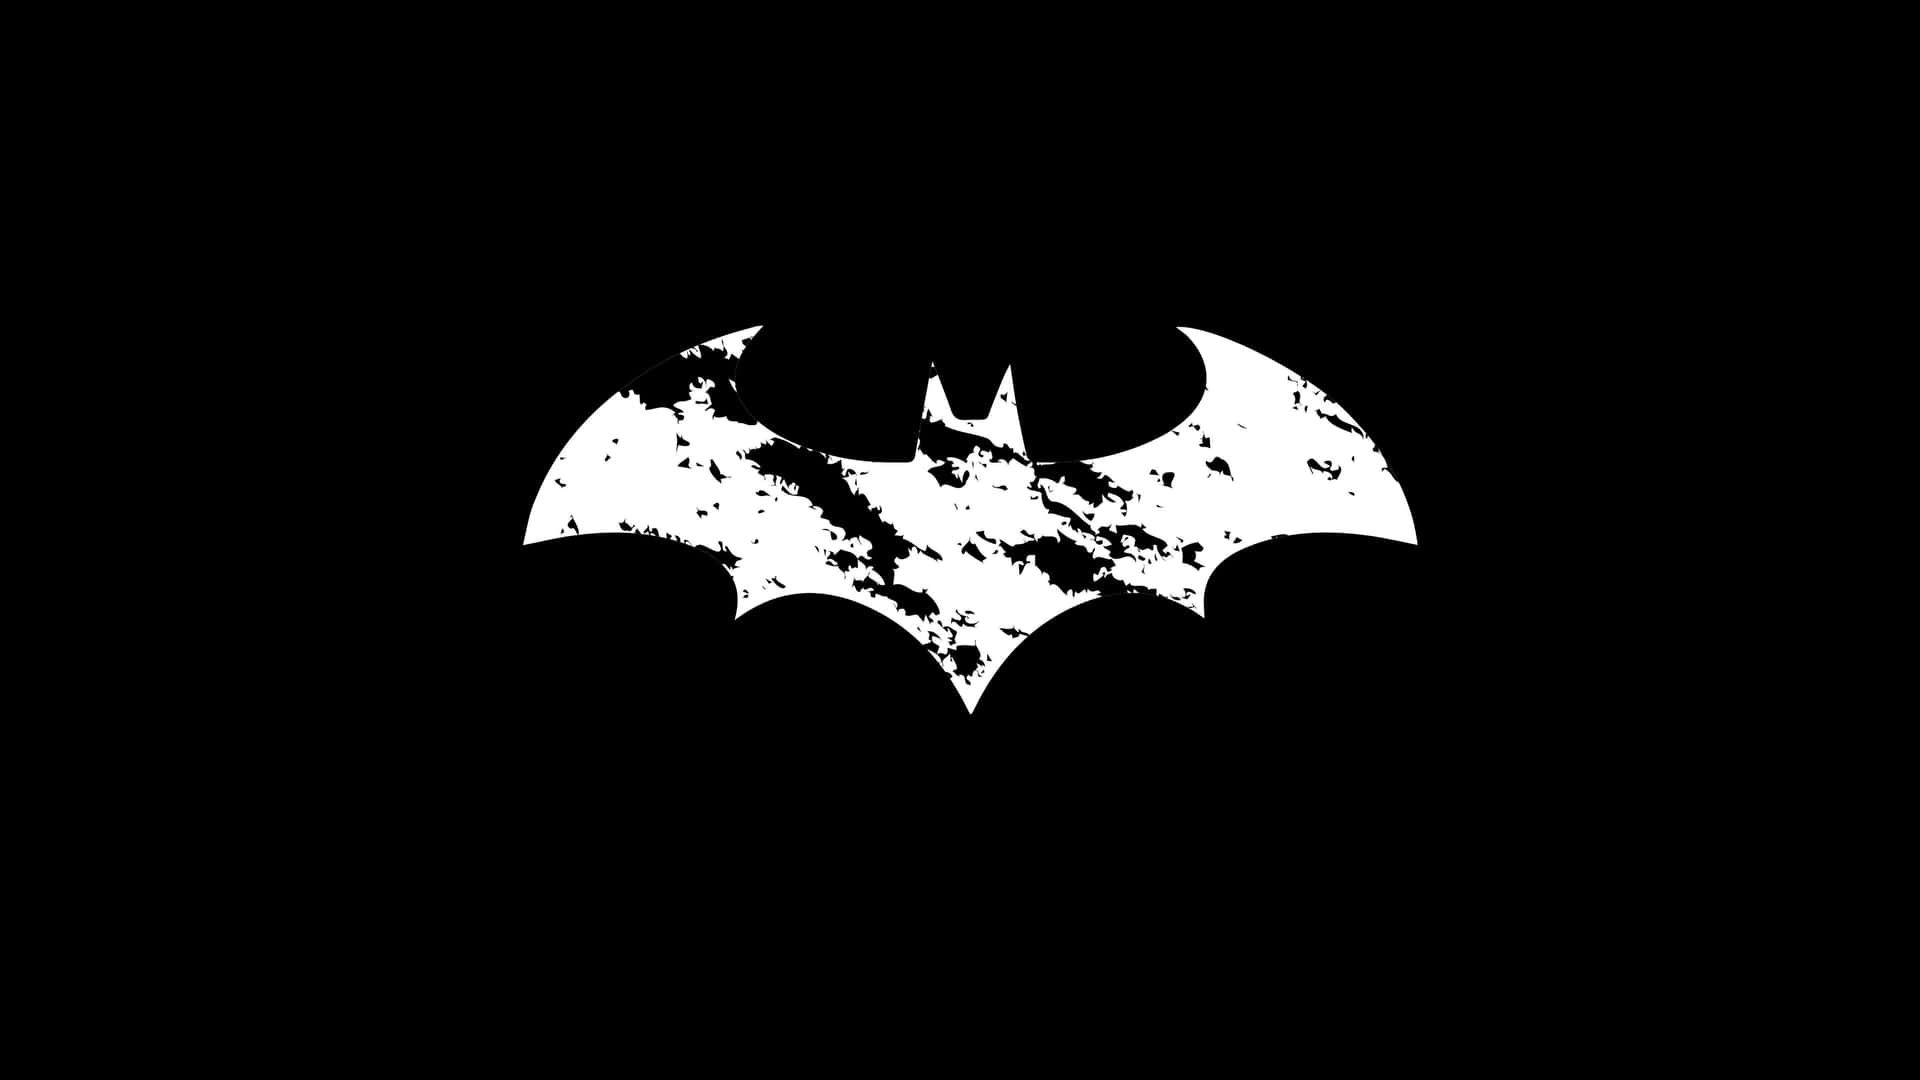 Batman Stands Tall in the Dark City Wallpaper